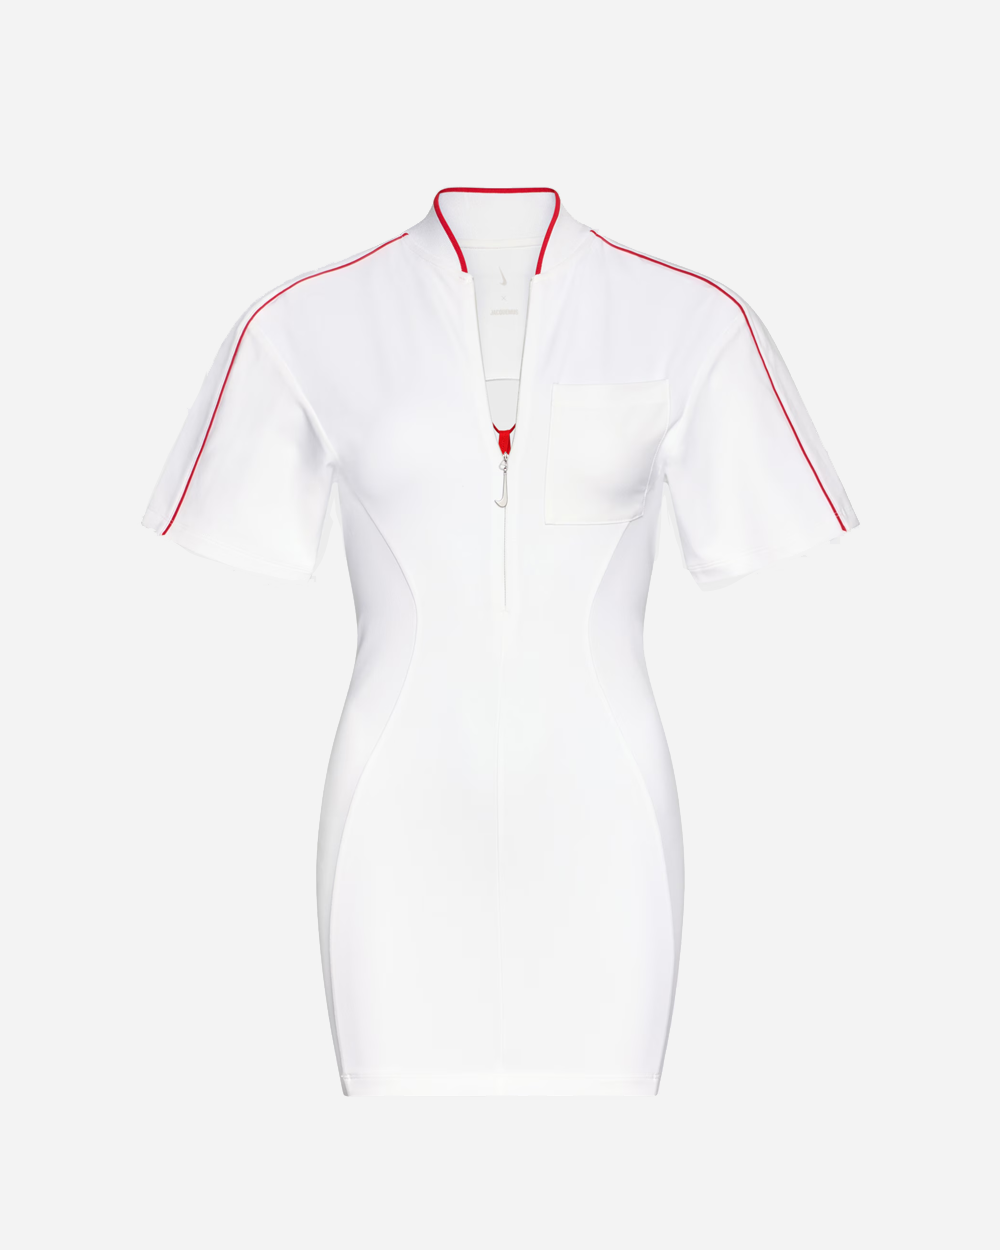 Jacquemus x Nike Dress White/University Red FV5682-100